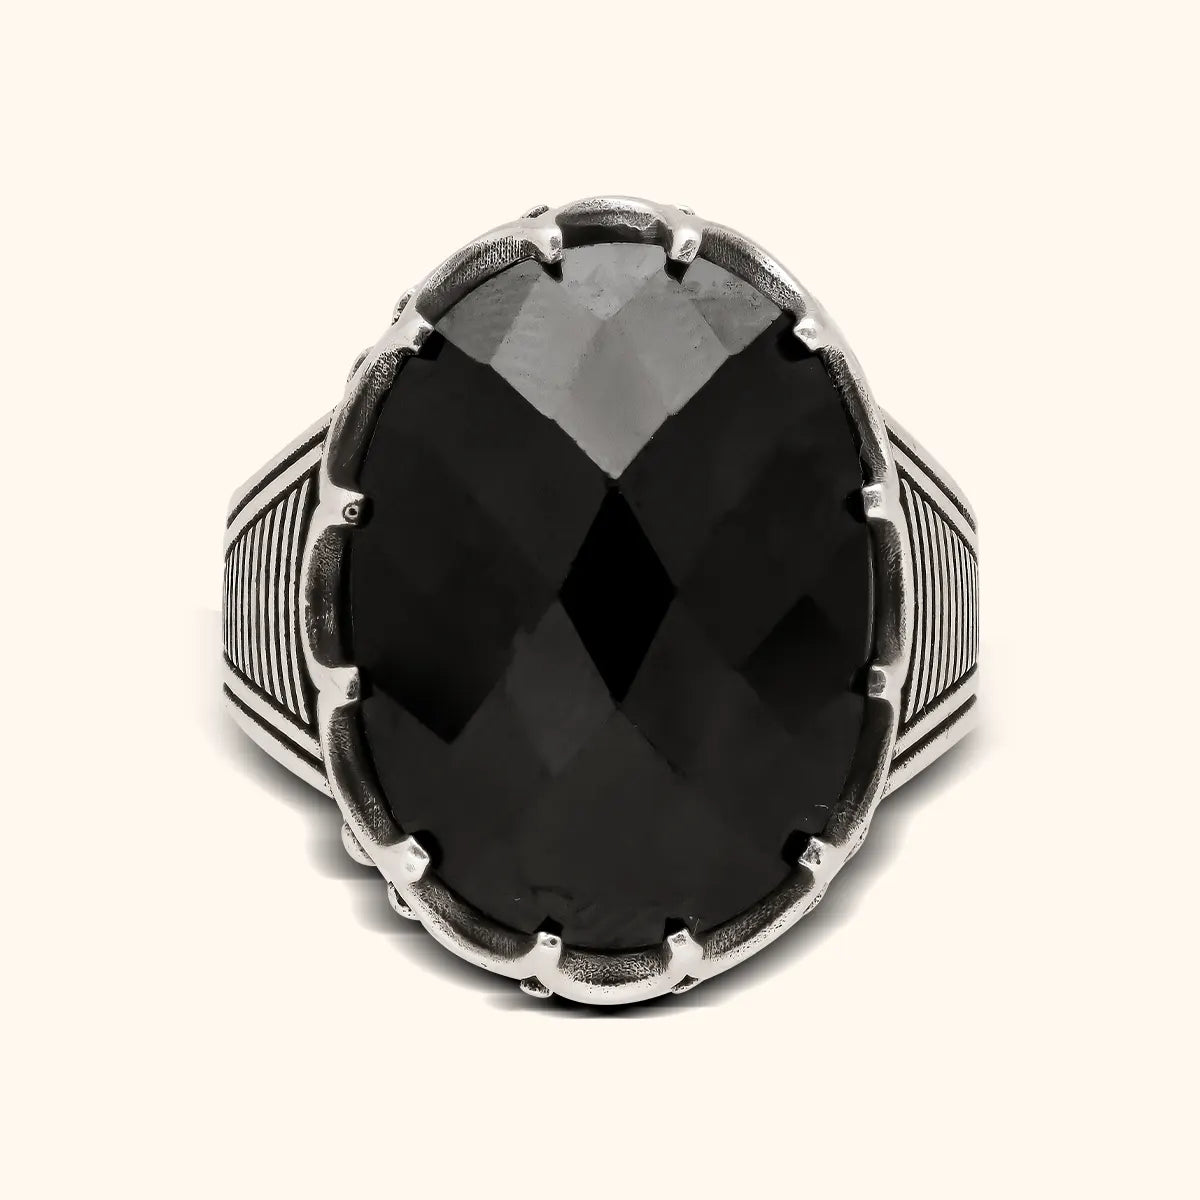 92.5% Handmade Sterling Silver Turkish Men's Gemstone Ring at Rs 1700/piece  in Jaipur